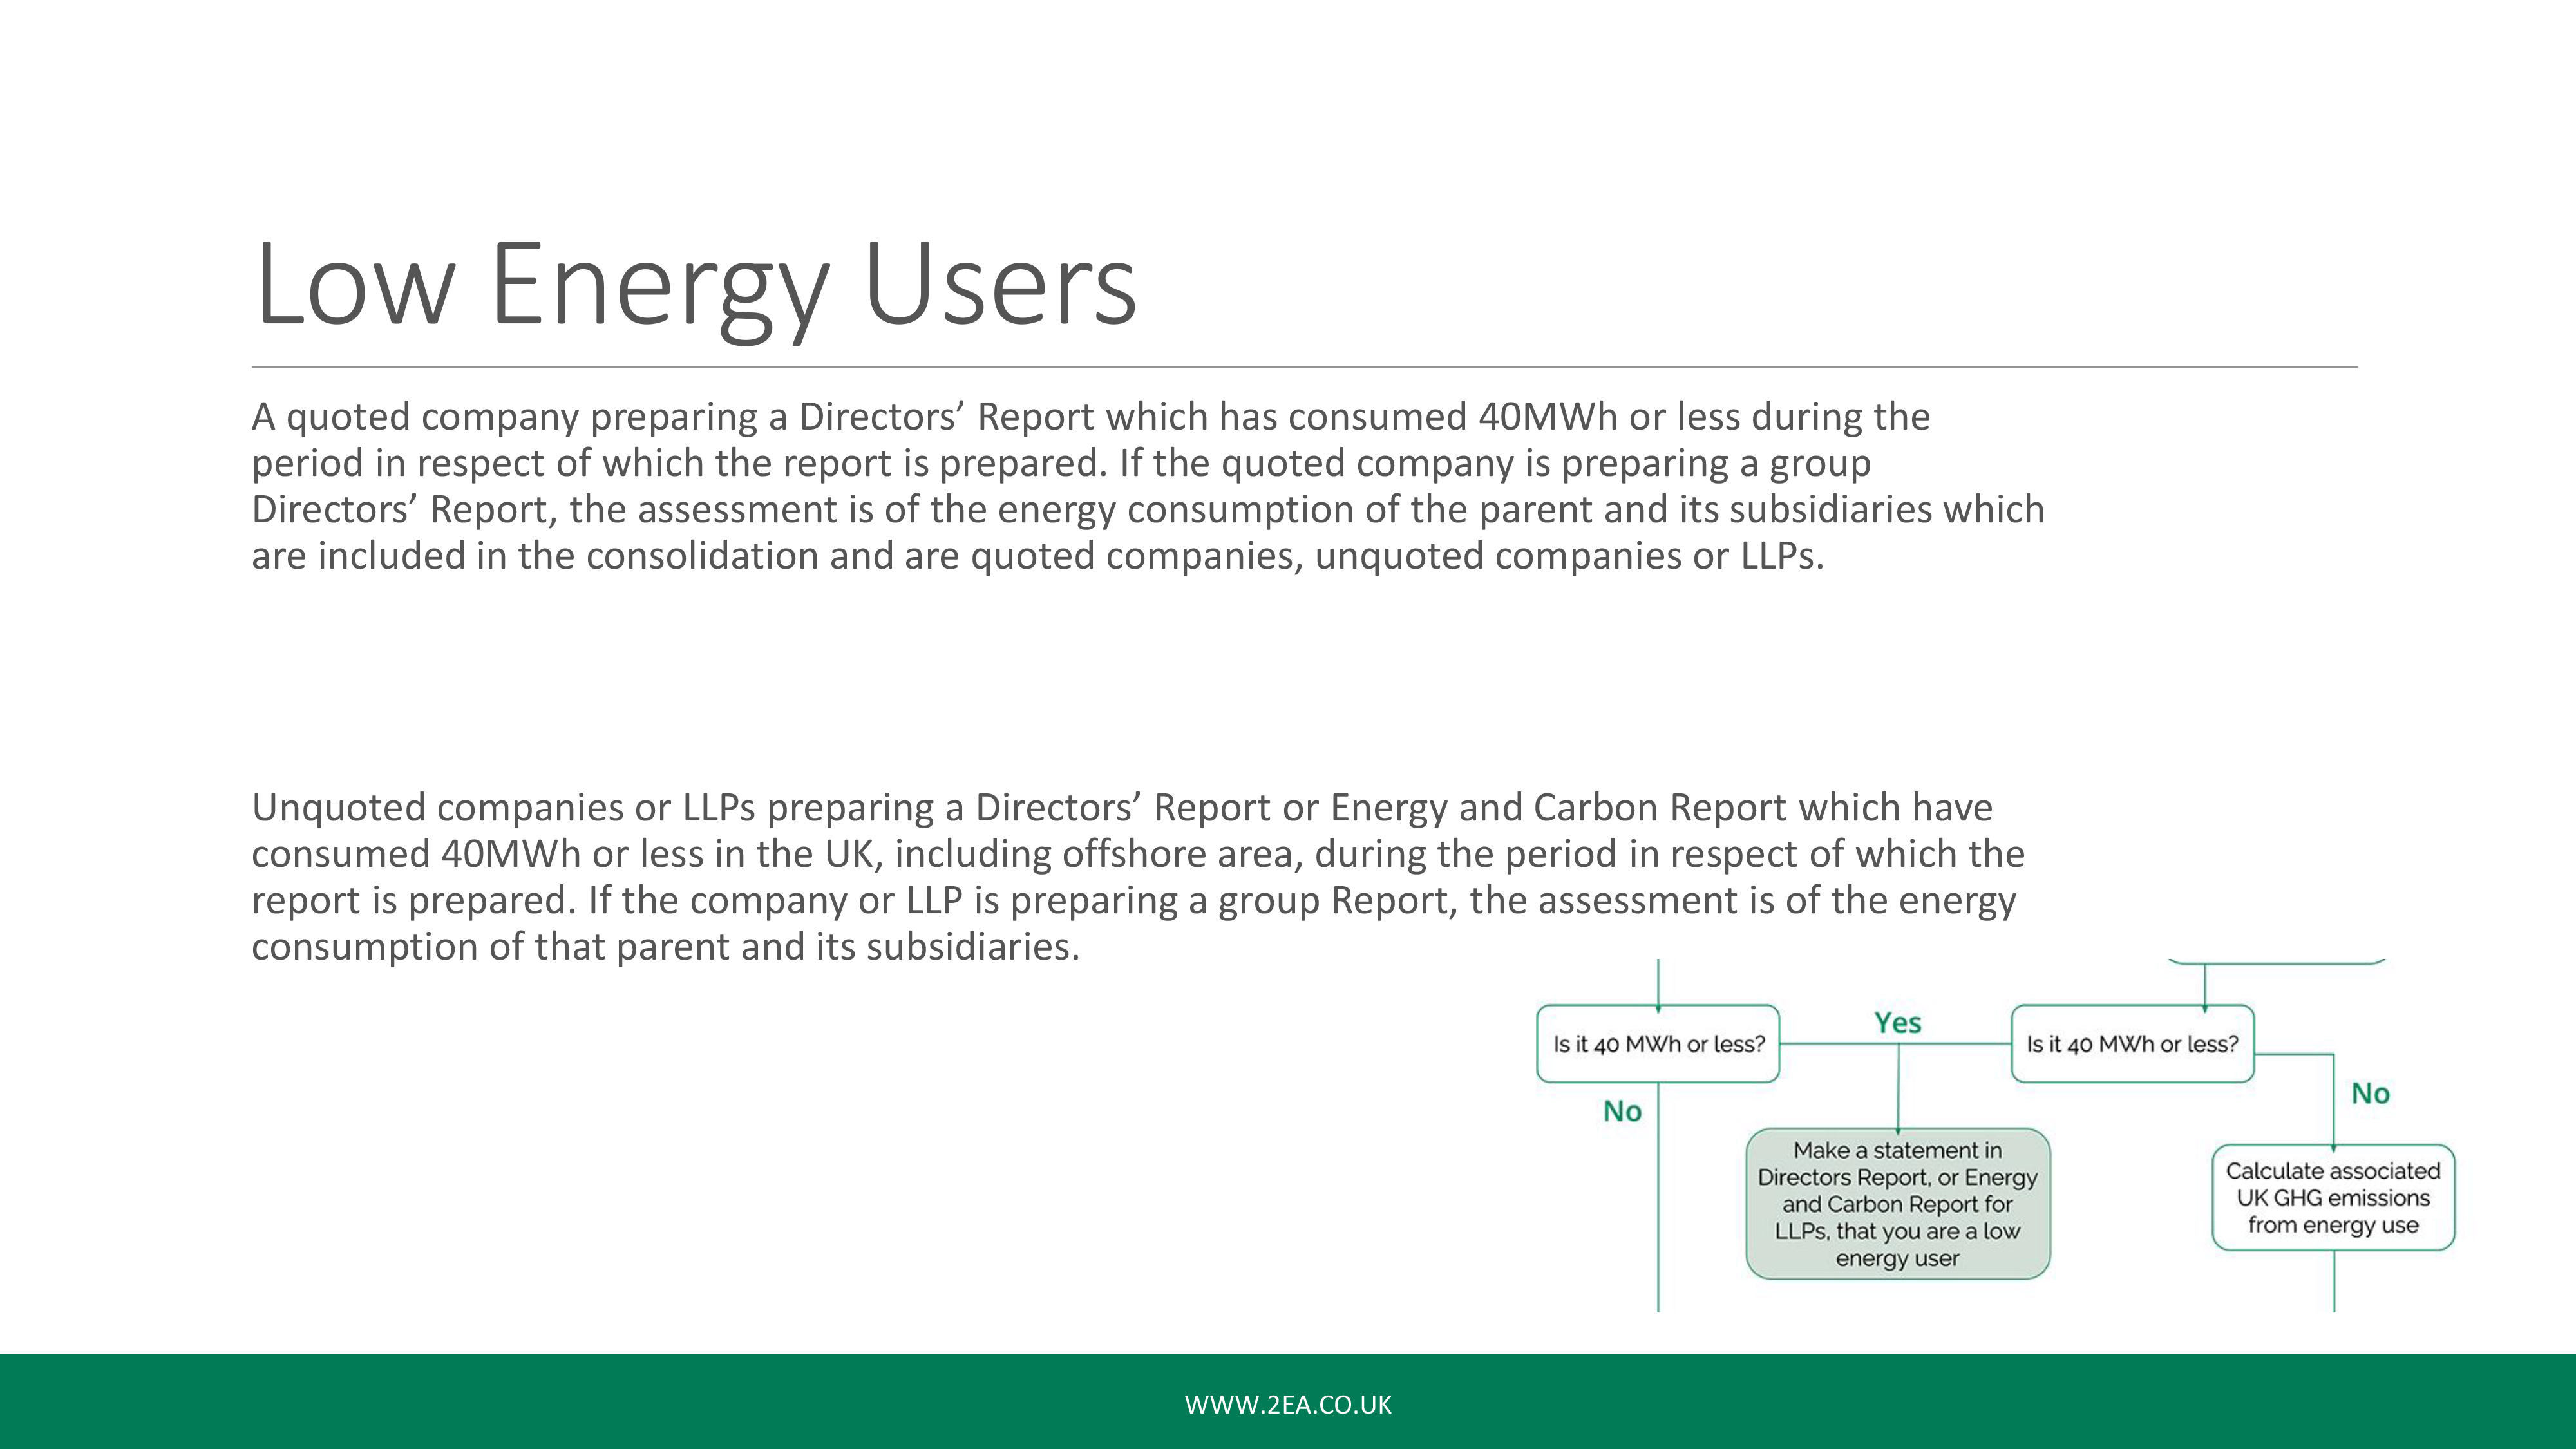 SECR Webinar: Low Energy Users